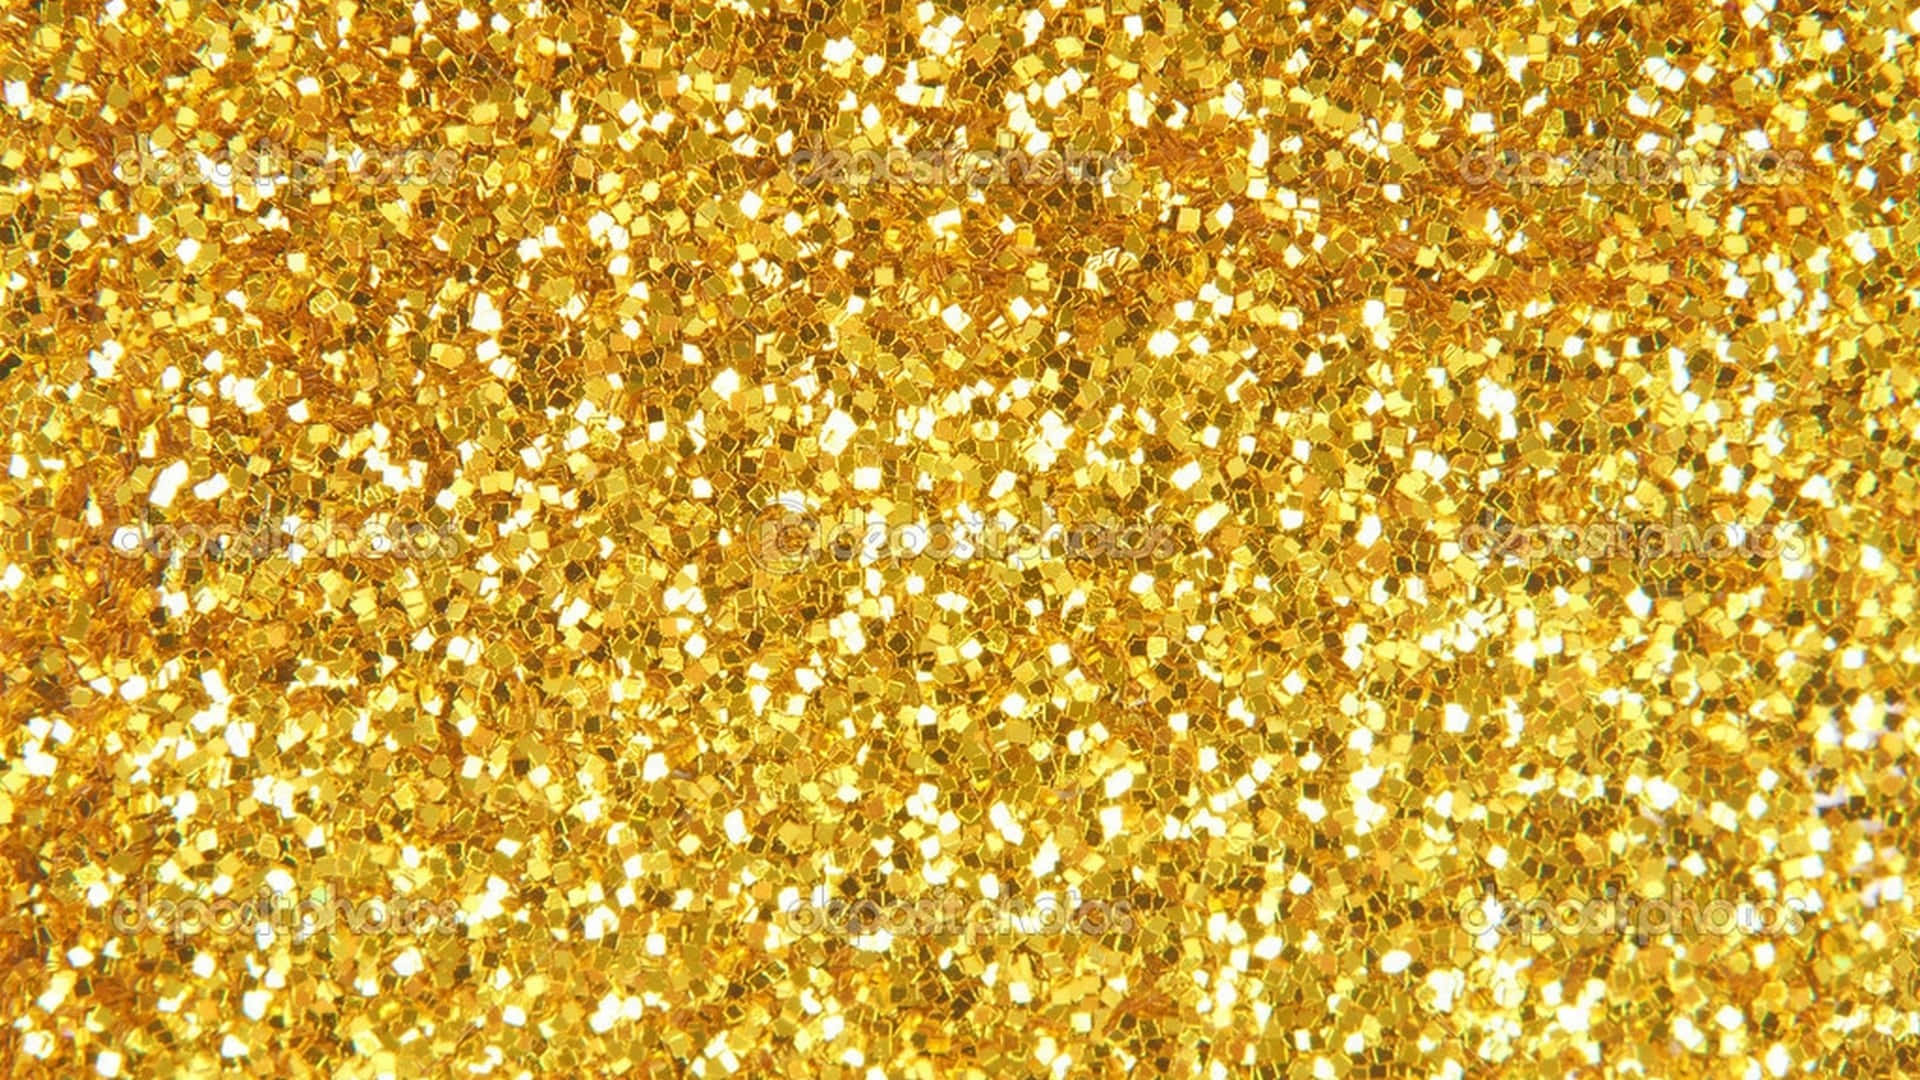 Enchanting Display of Gold Glitter